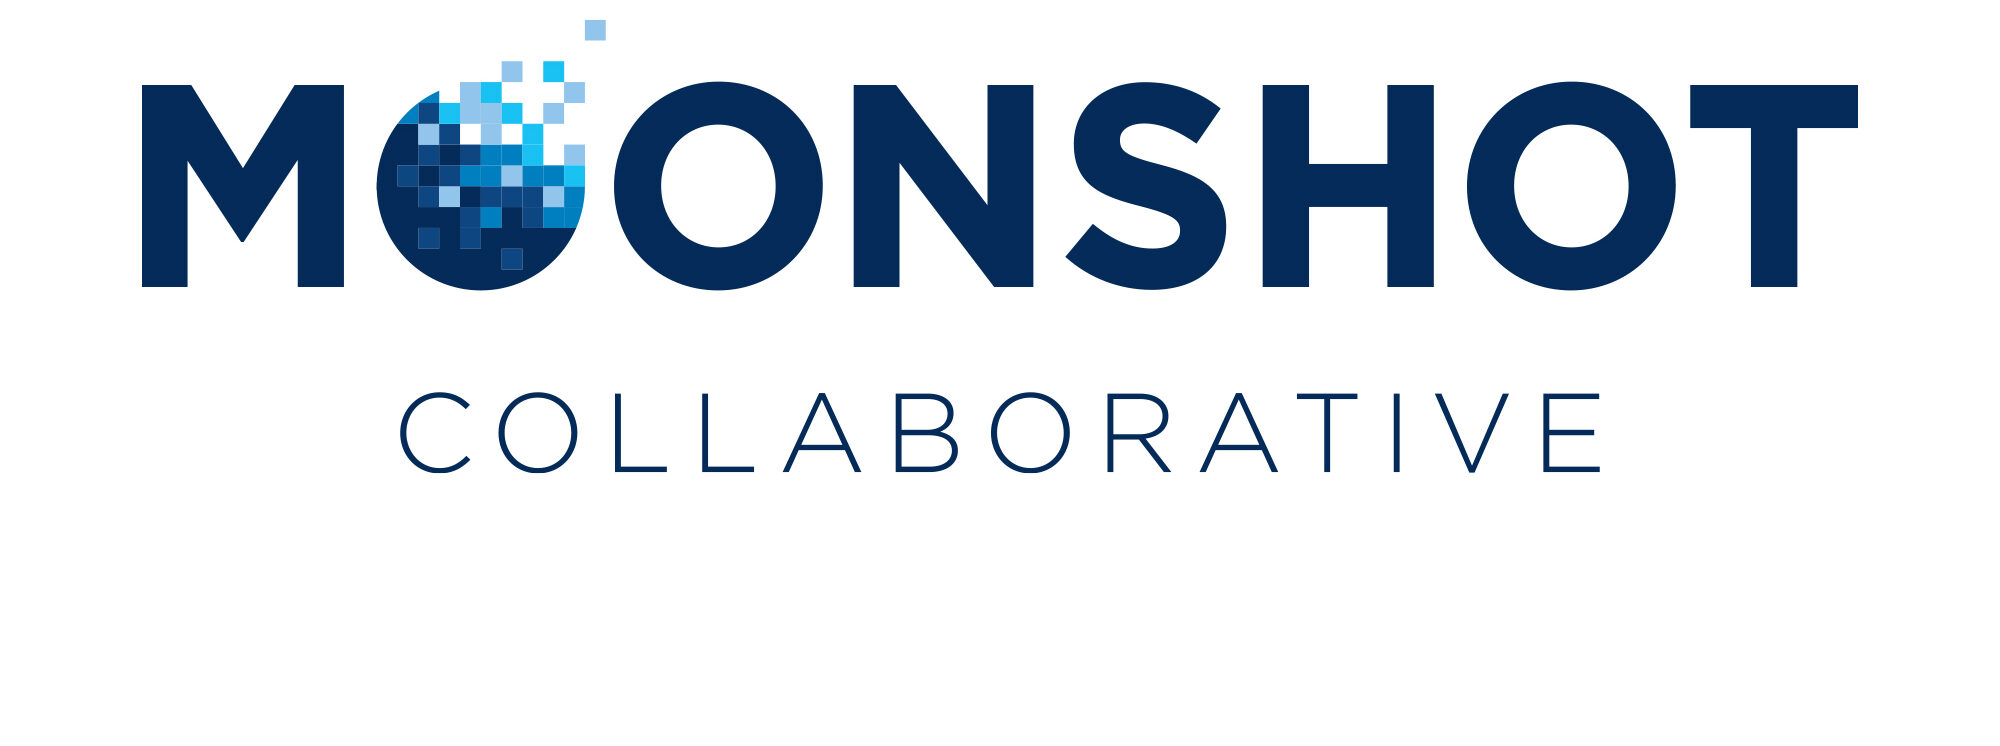 Moonshot Collaborative logo